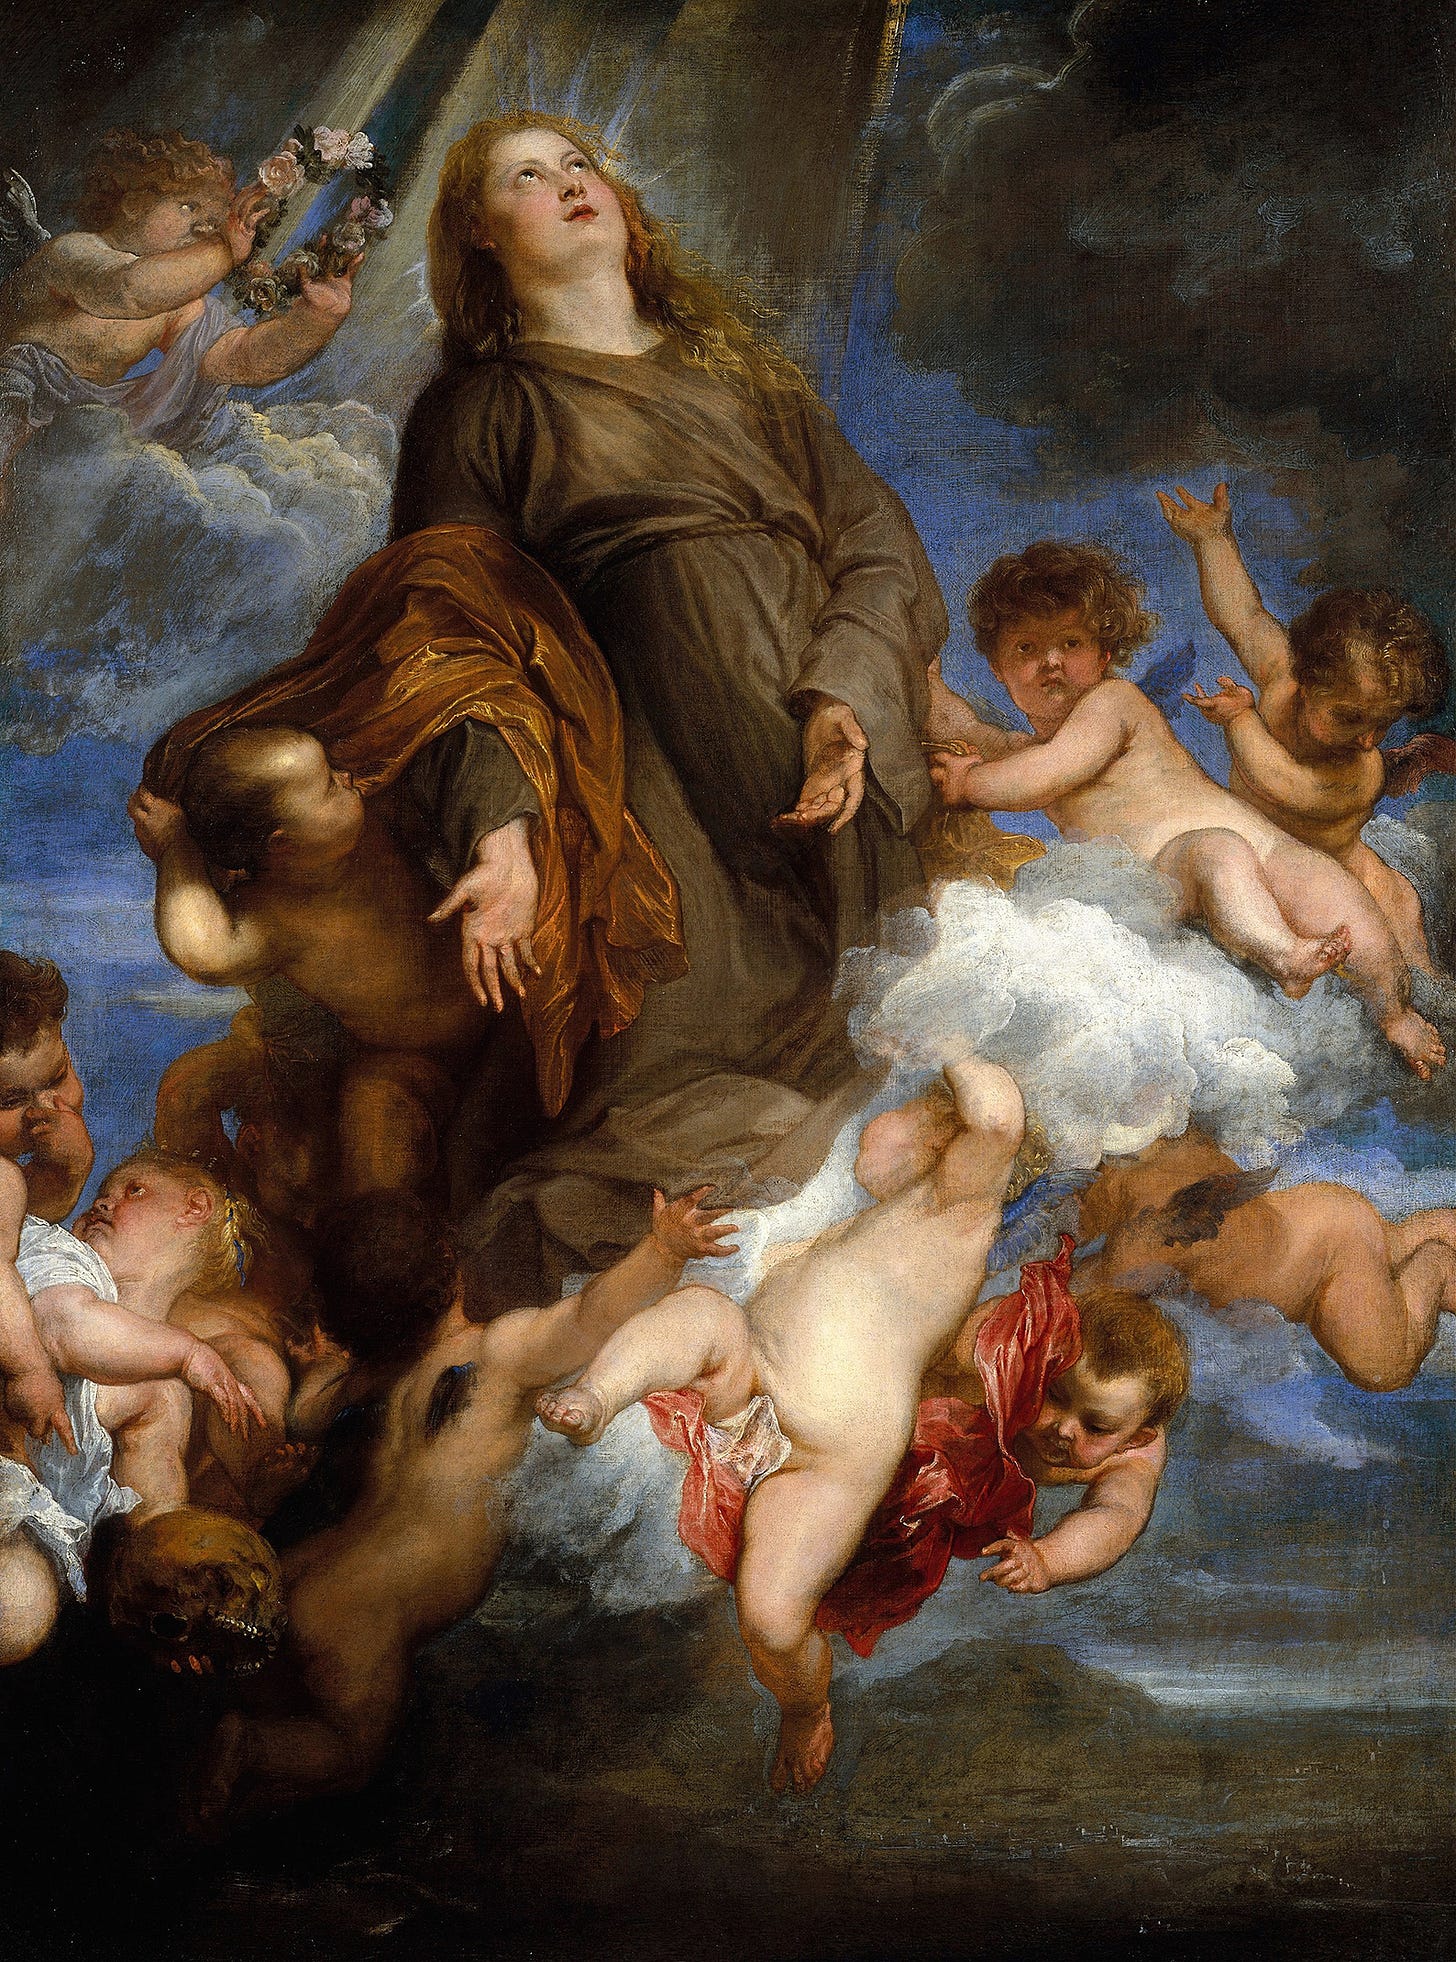 Saint Rosalie Interceding for the Plague-stricken of Palermo (1624)